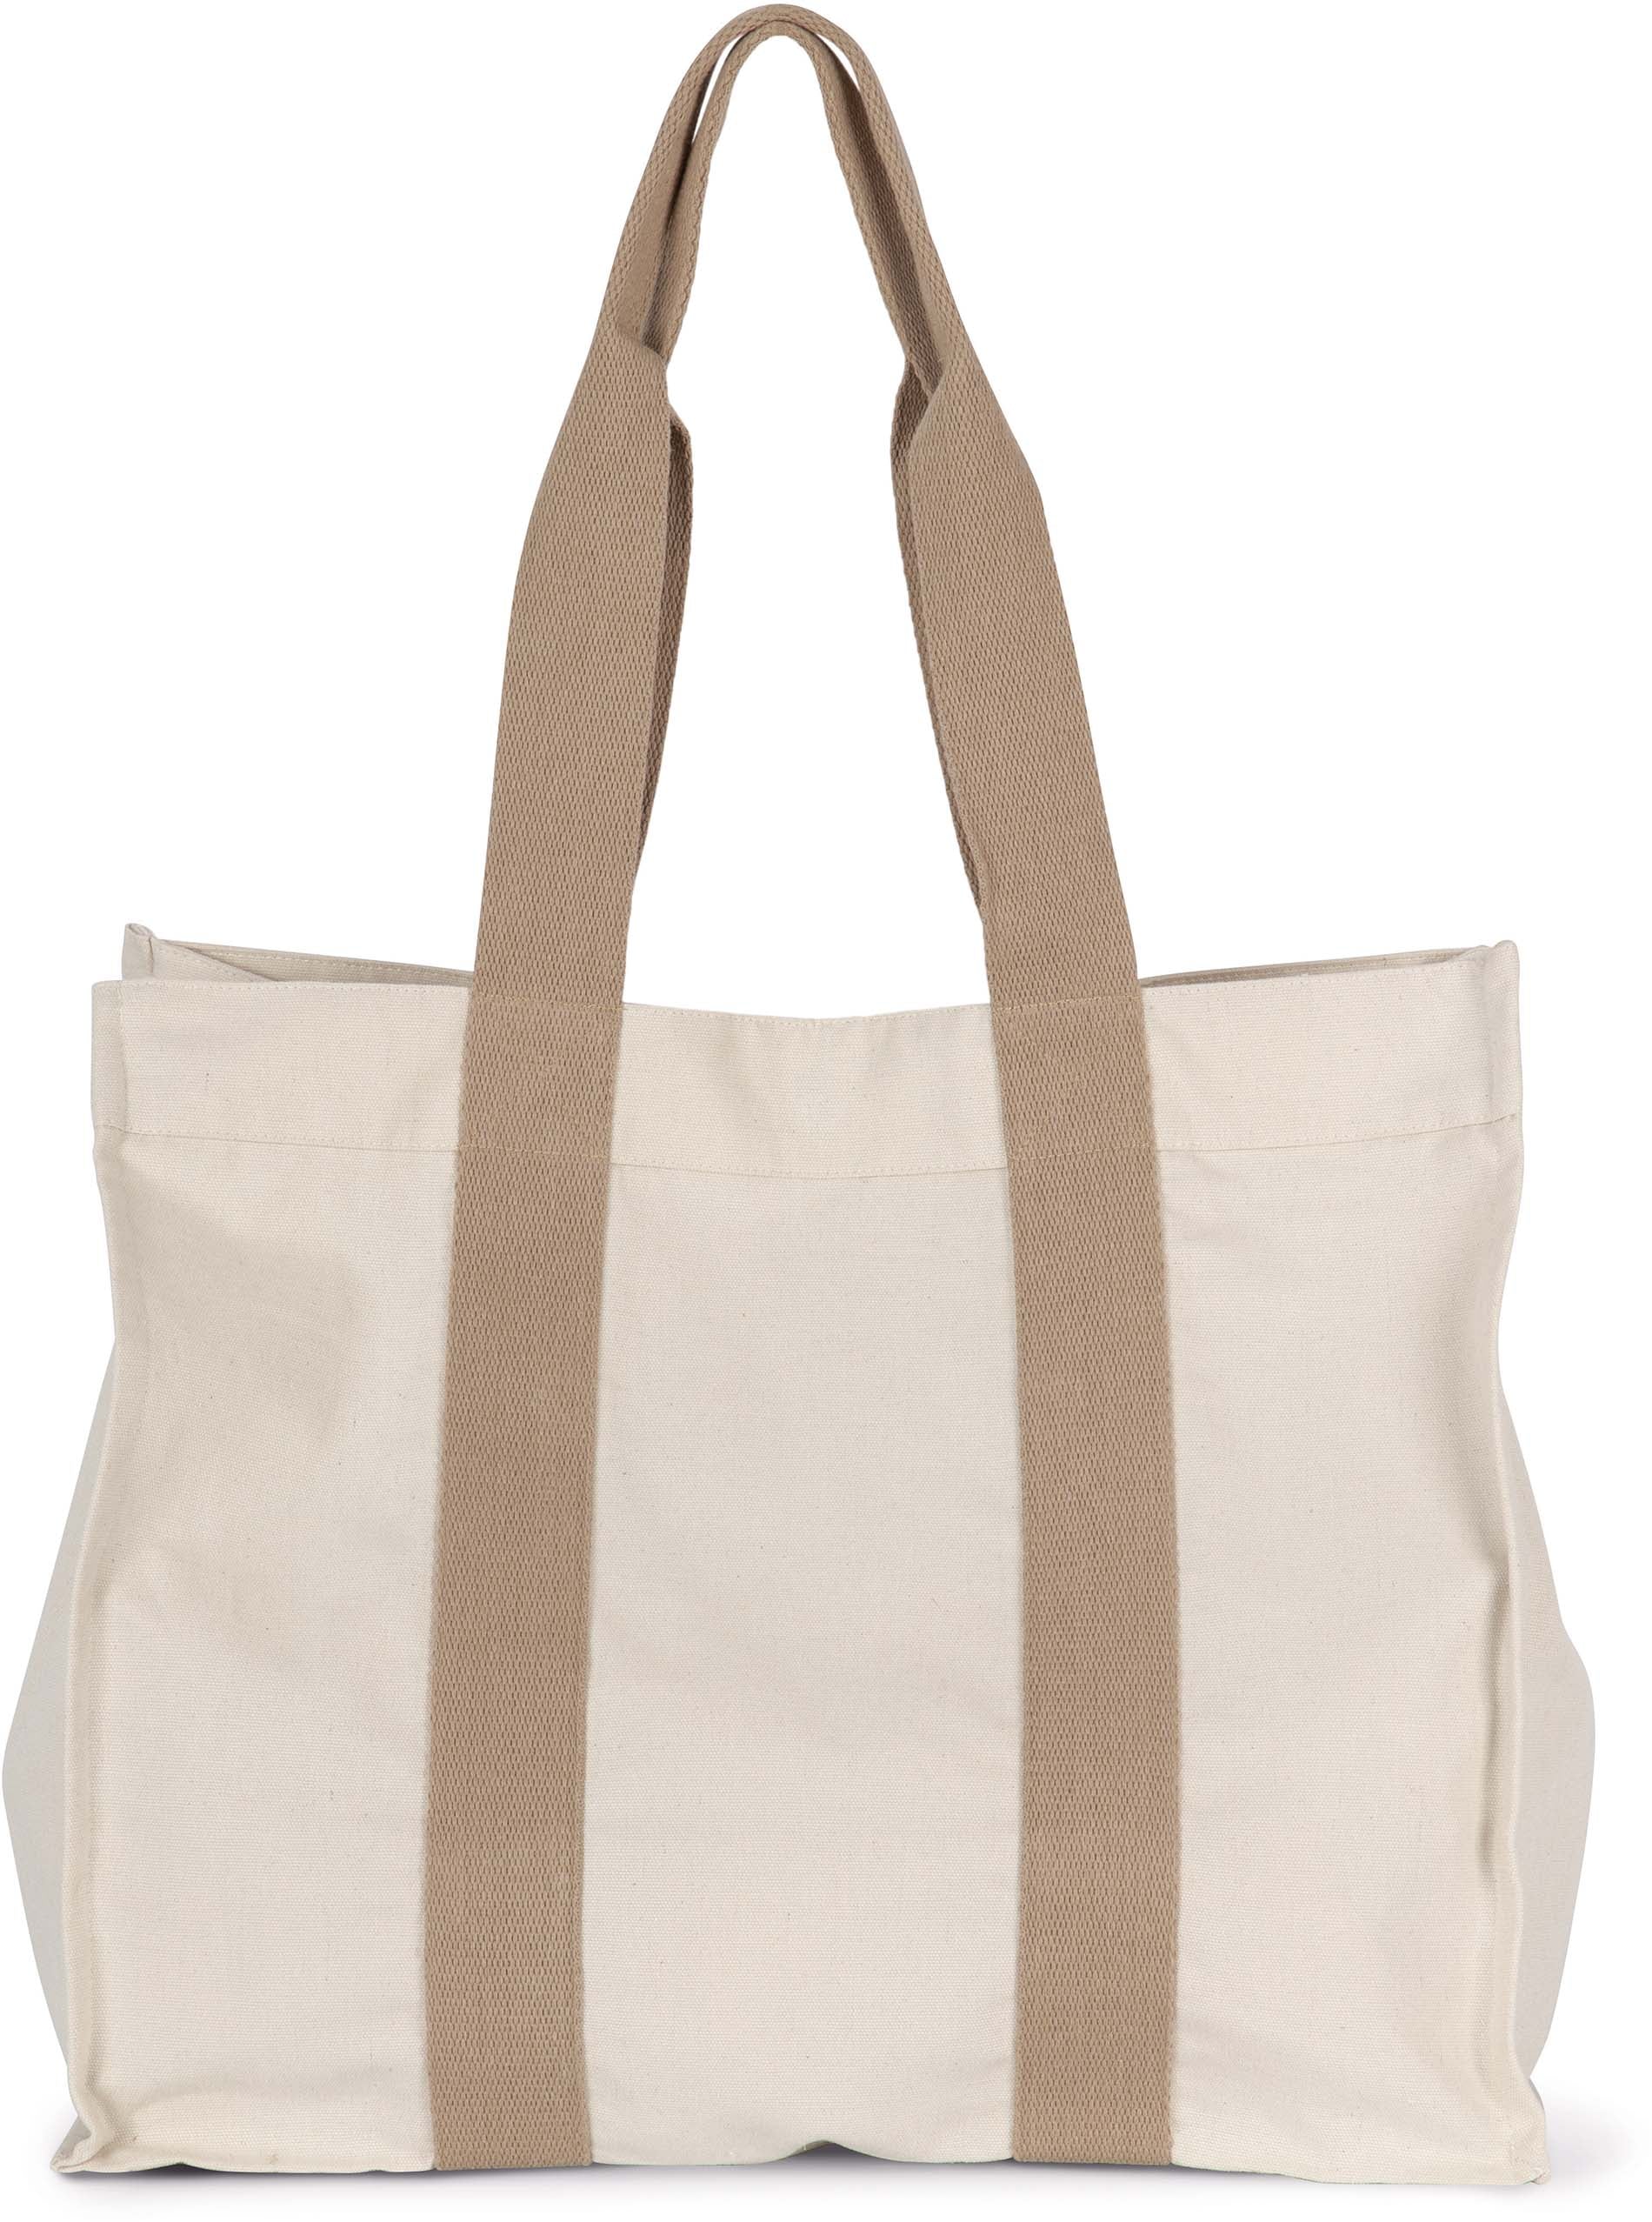 Grand sac shopping à soufflet recyclé - KI5201 Sac cabas : minimum 2 pièces kimood Écume 